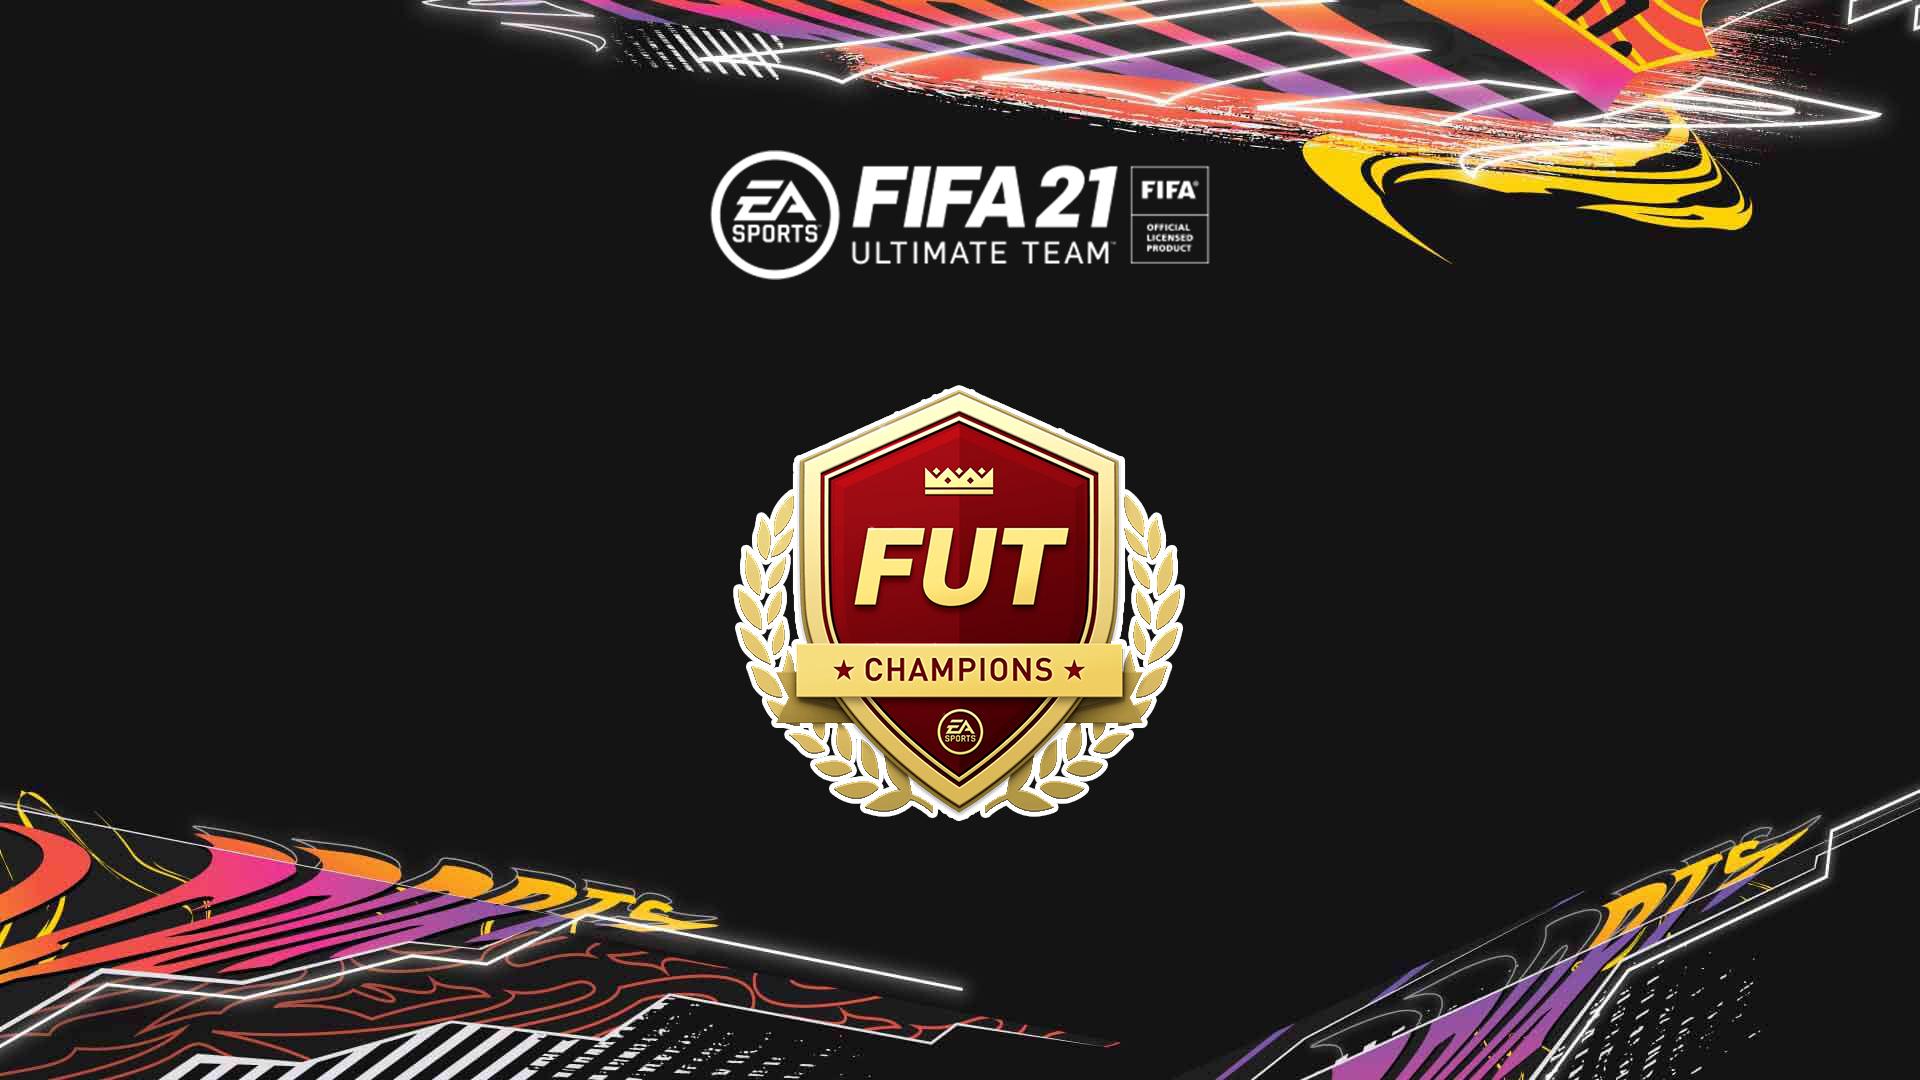 Fifa Ultimate Team FUT Champions FIFA 21 header